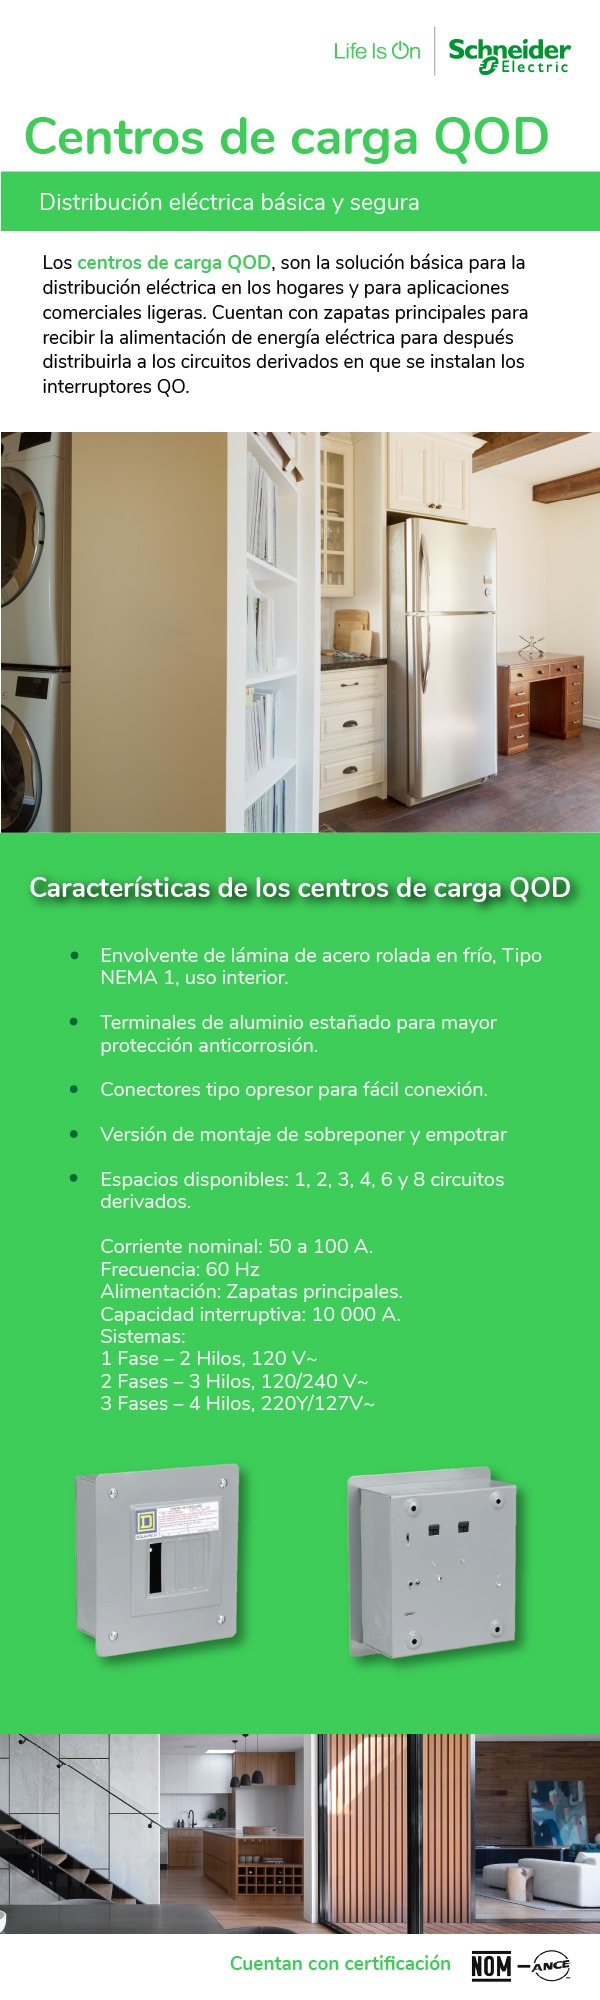 Centros de Carga QOD Schneider Electric Home Depot México